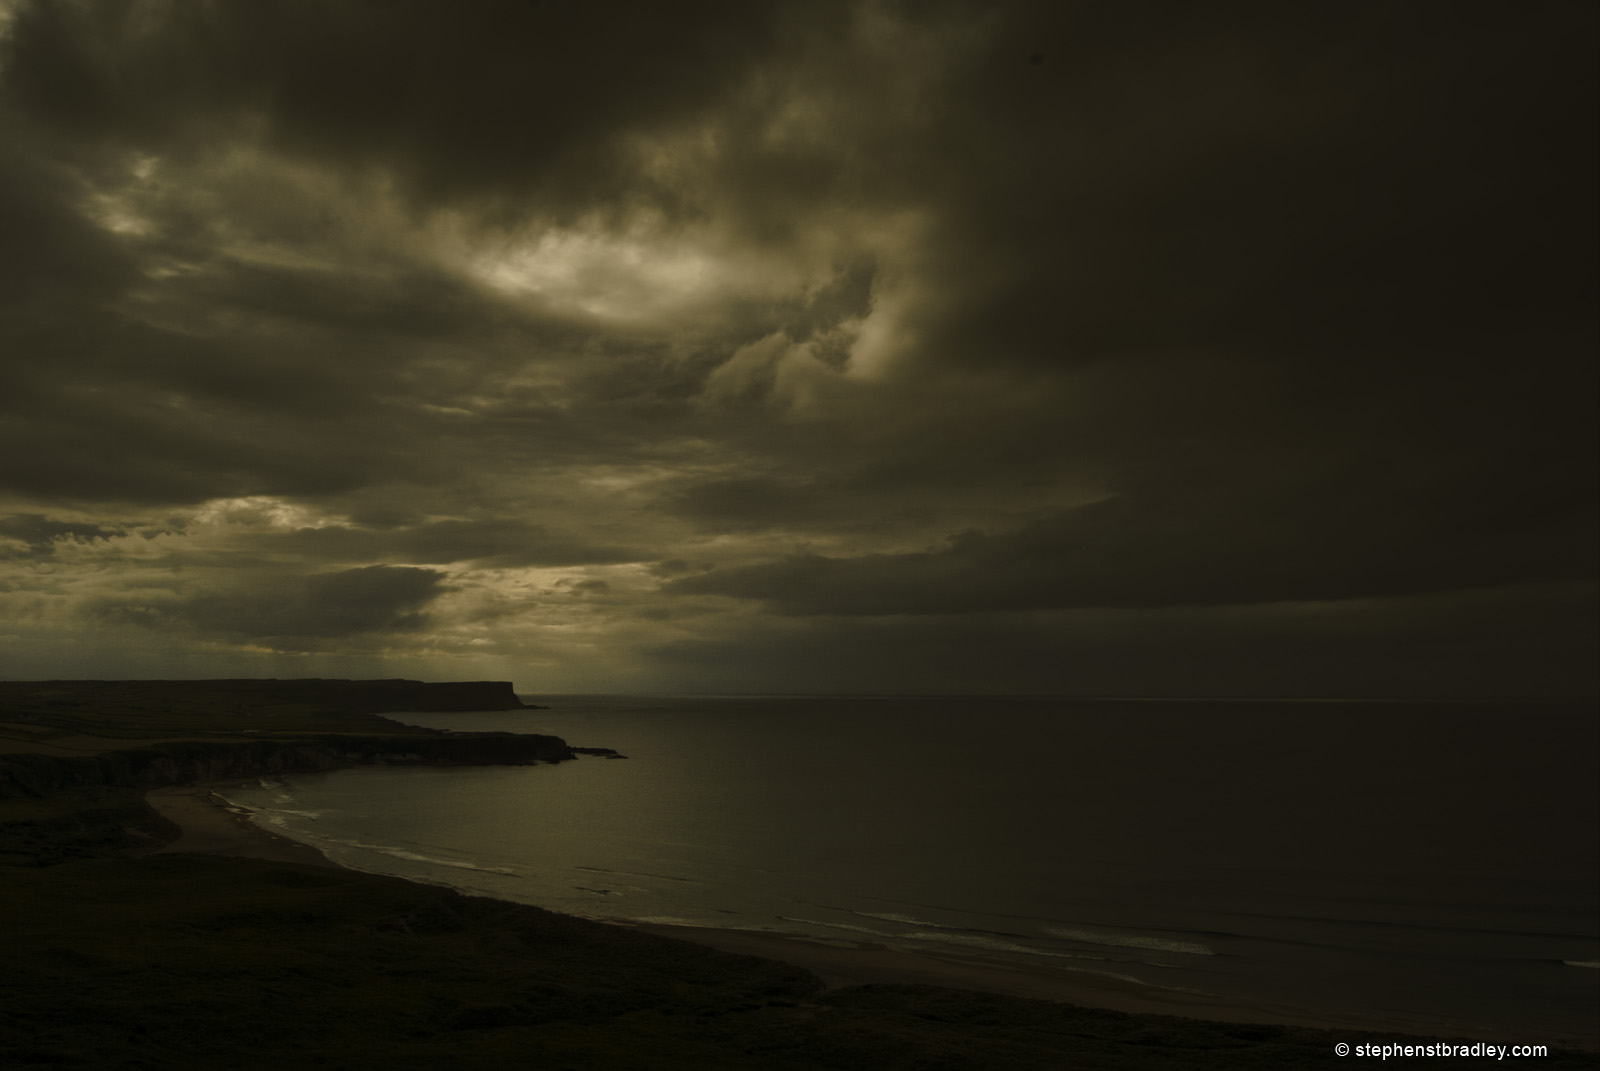 Landscape photograph of White Park Bay, Northern Ireland by Stephen Bradley photographer - photograph 2140.